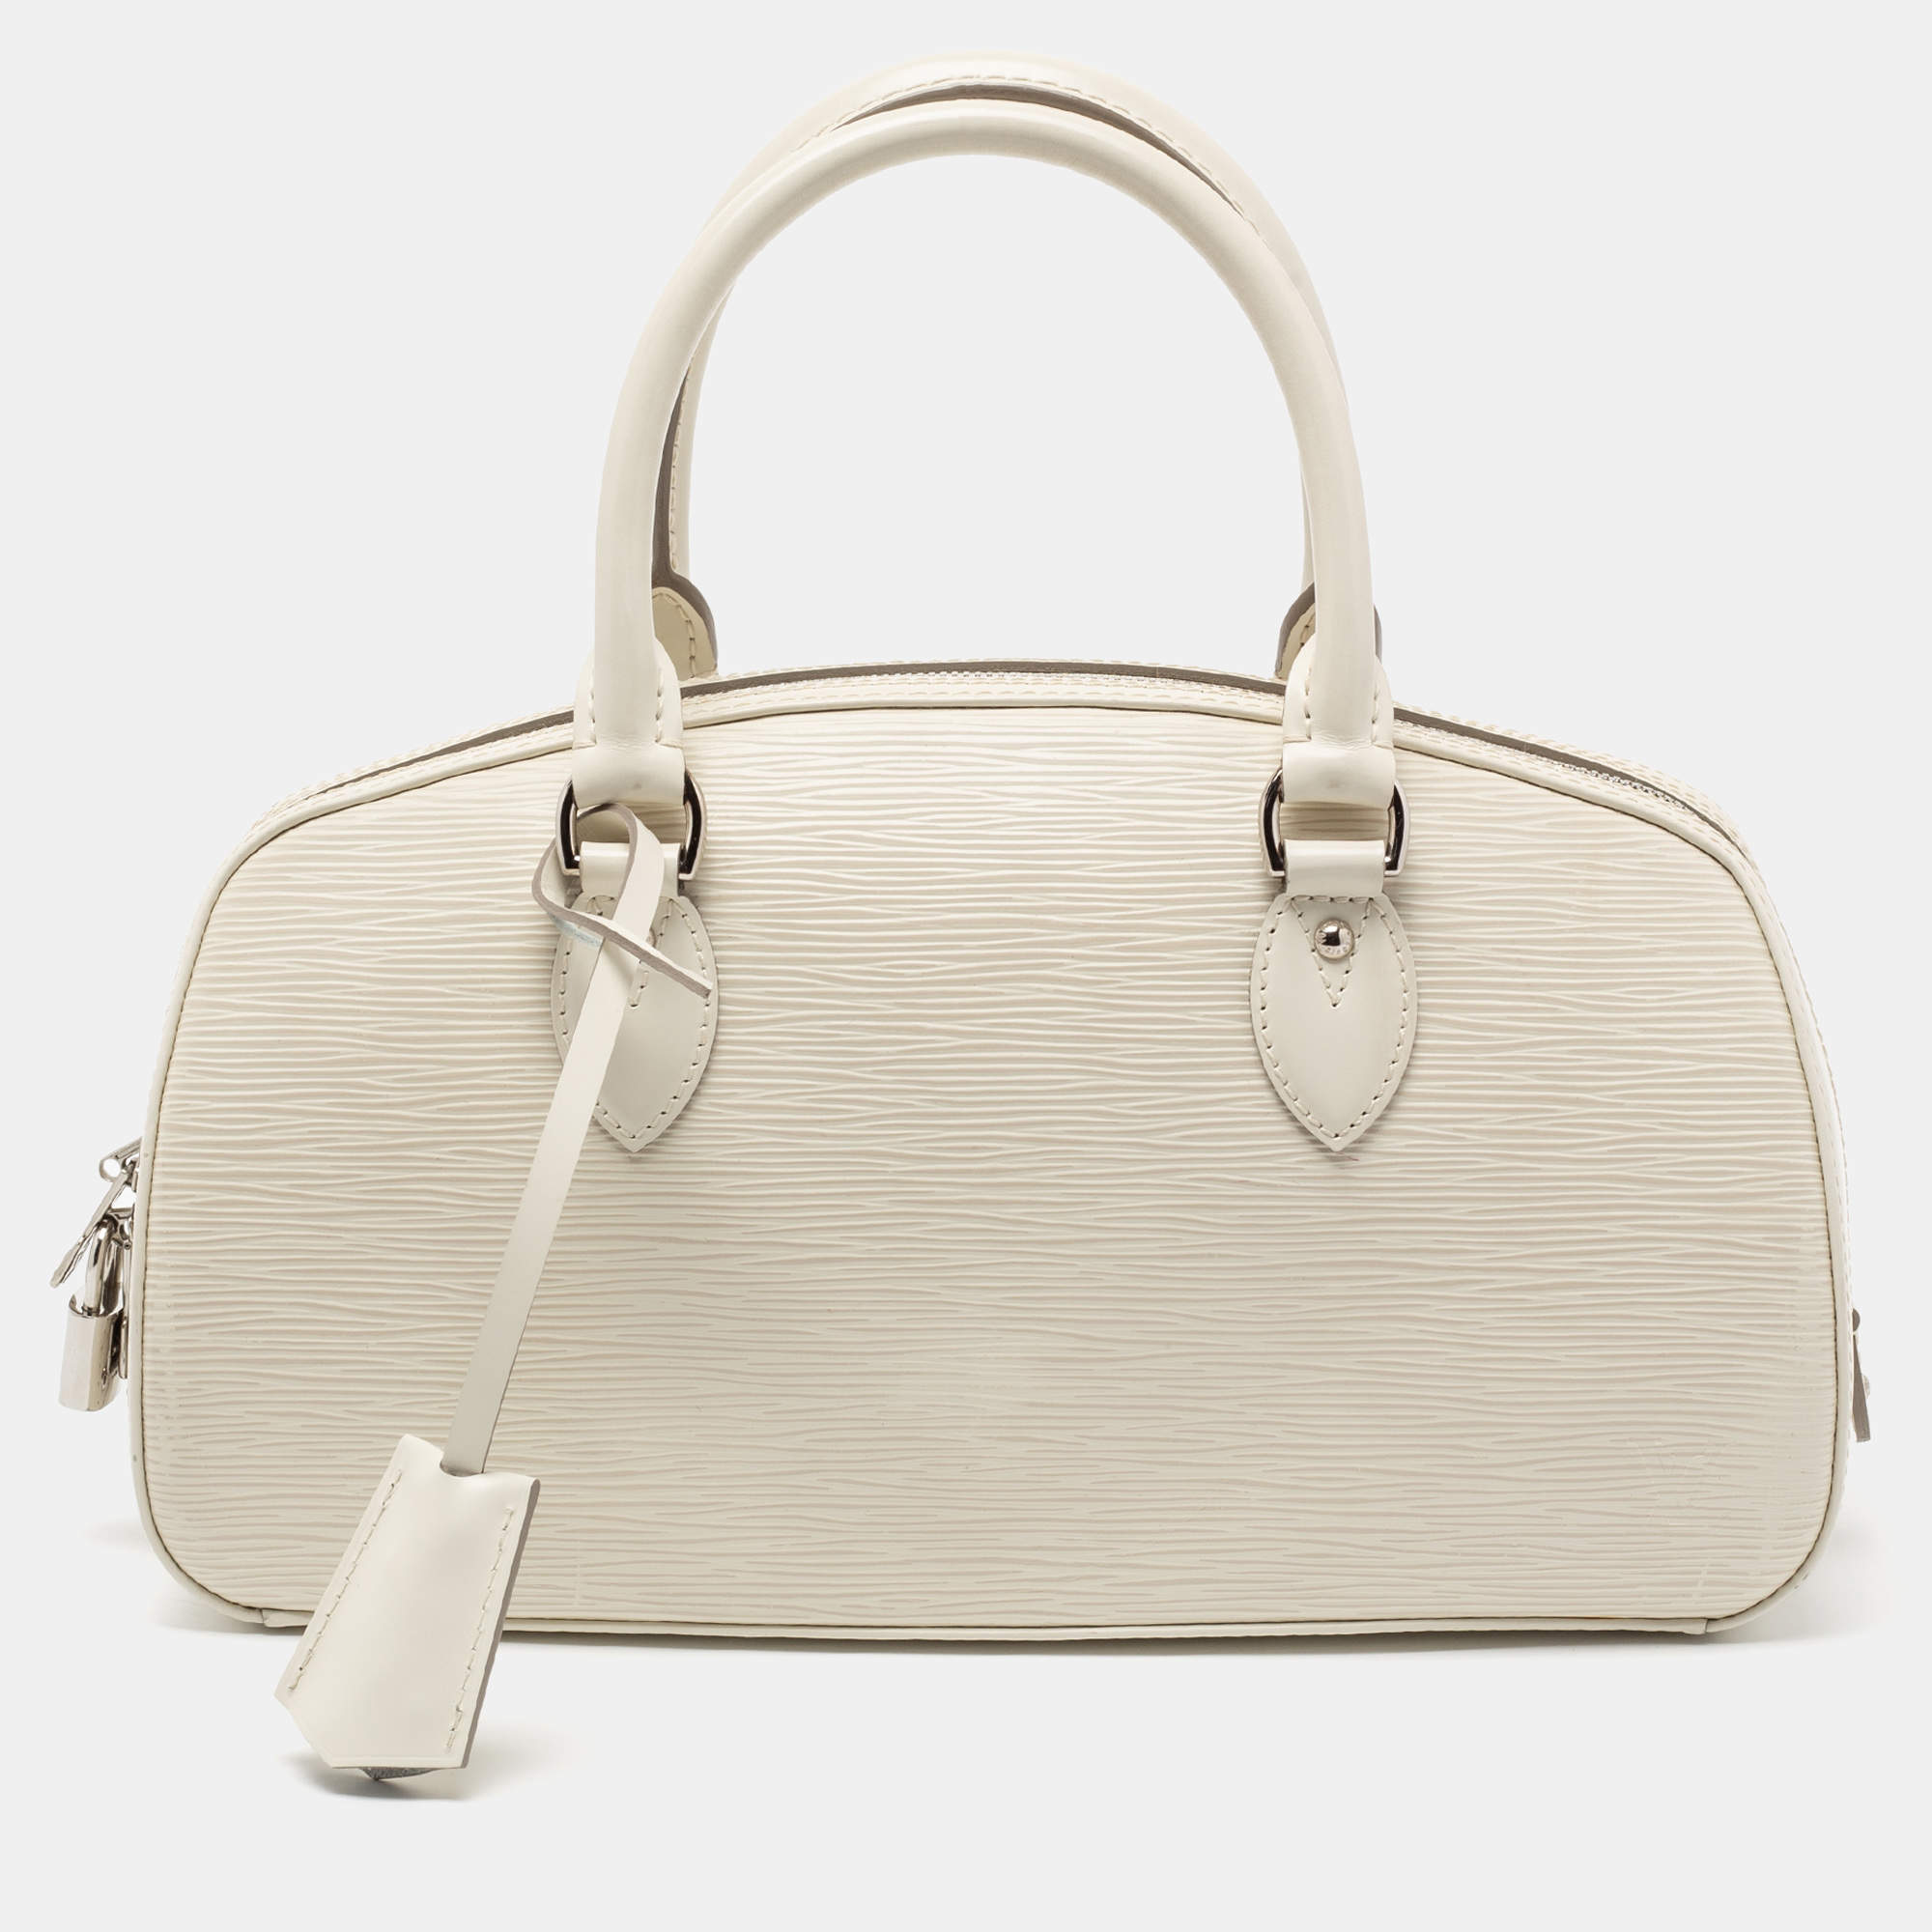 Louis Vuitton, Jasmin Epi Leather Red Handbag, Preowned. AUTHENTIC 100%